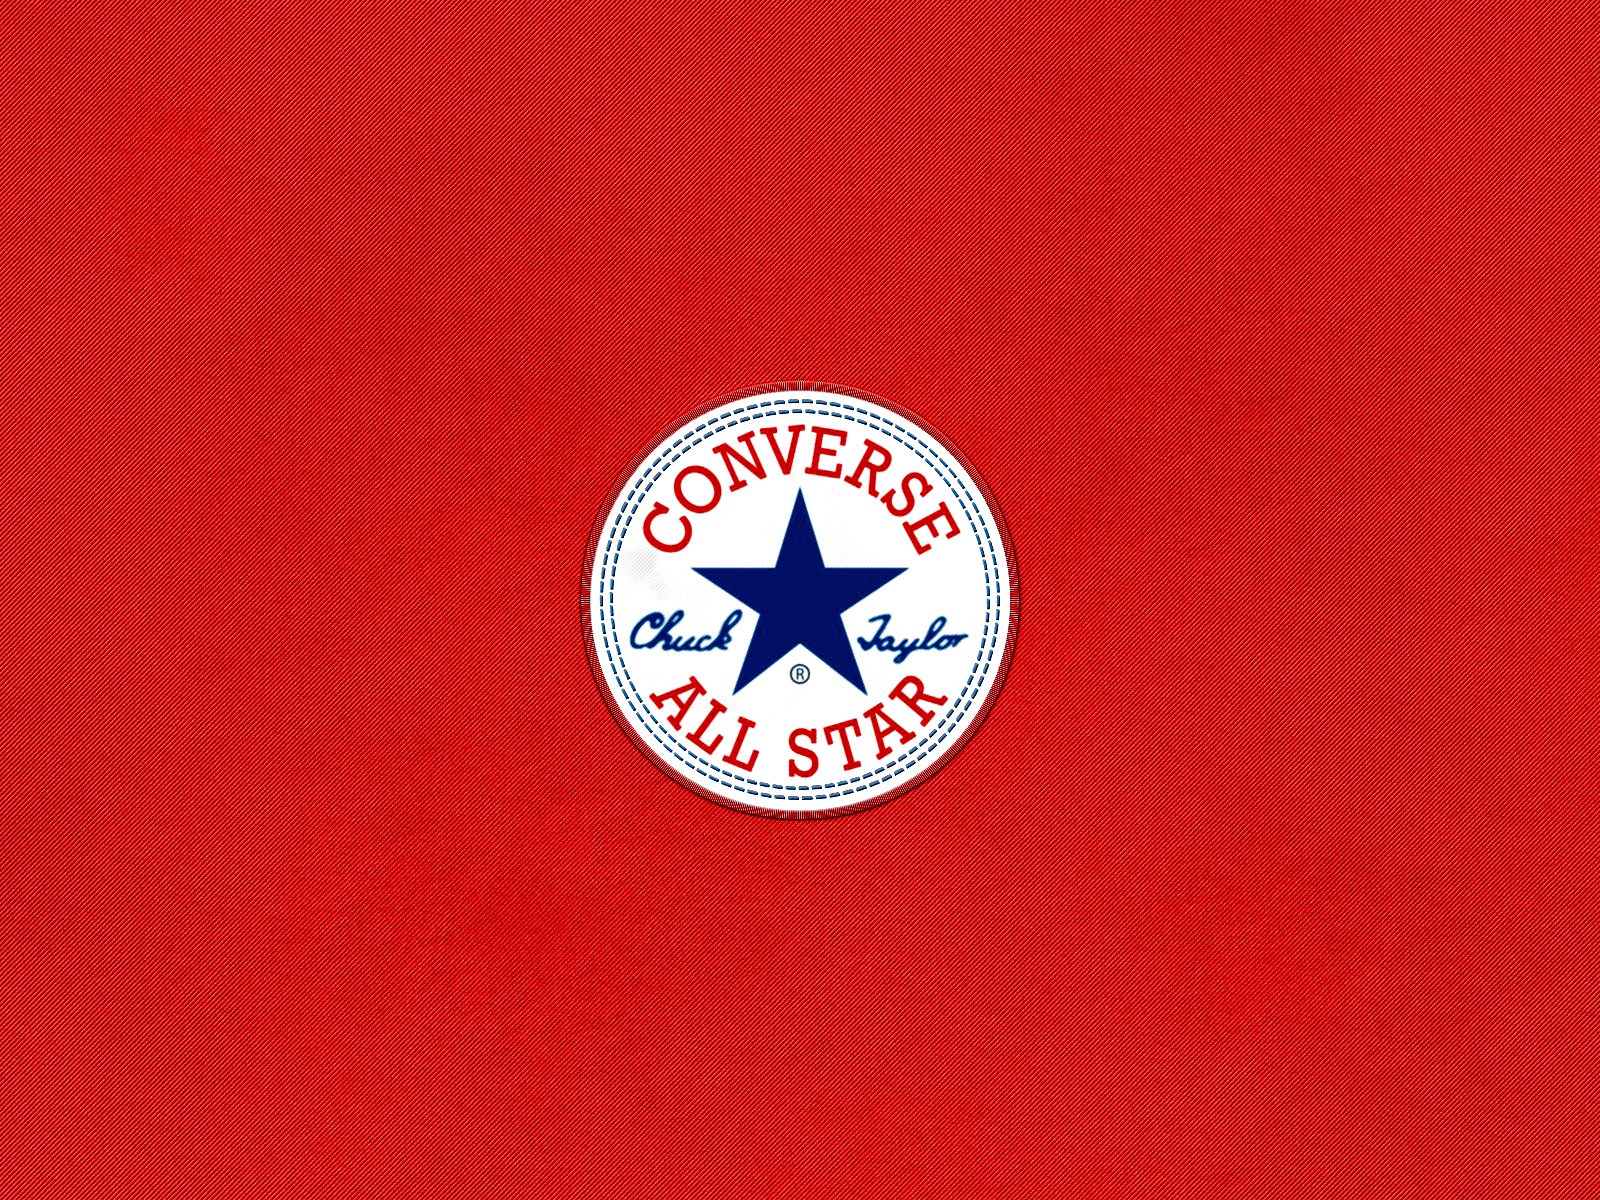 Converse All Star HD Logo Wallpaper Desktop